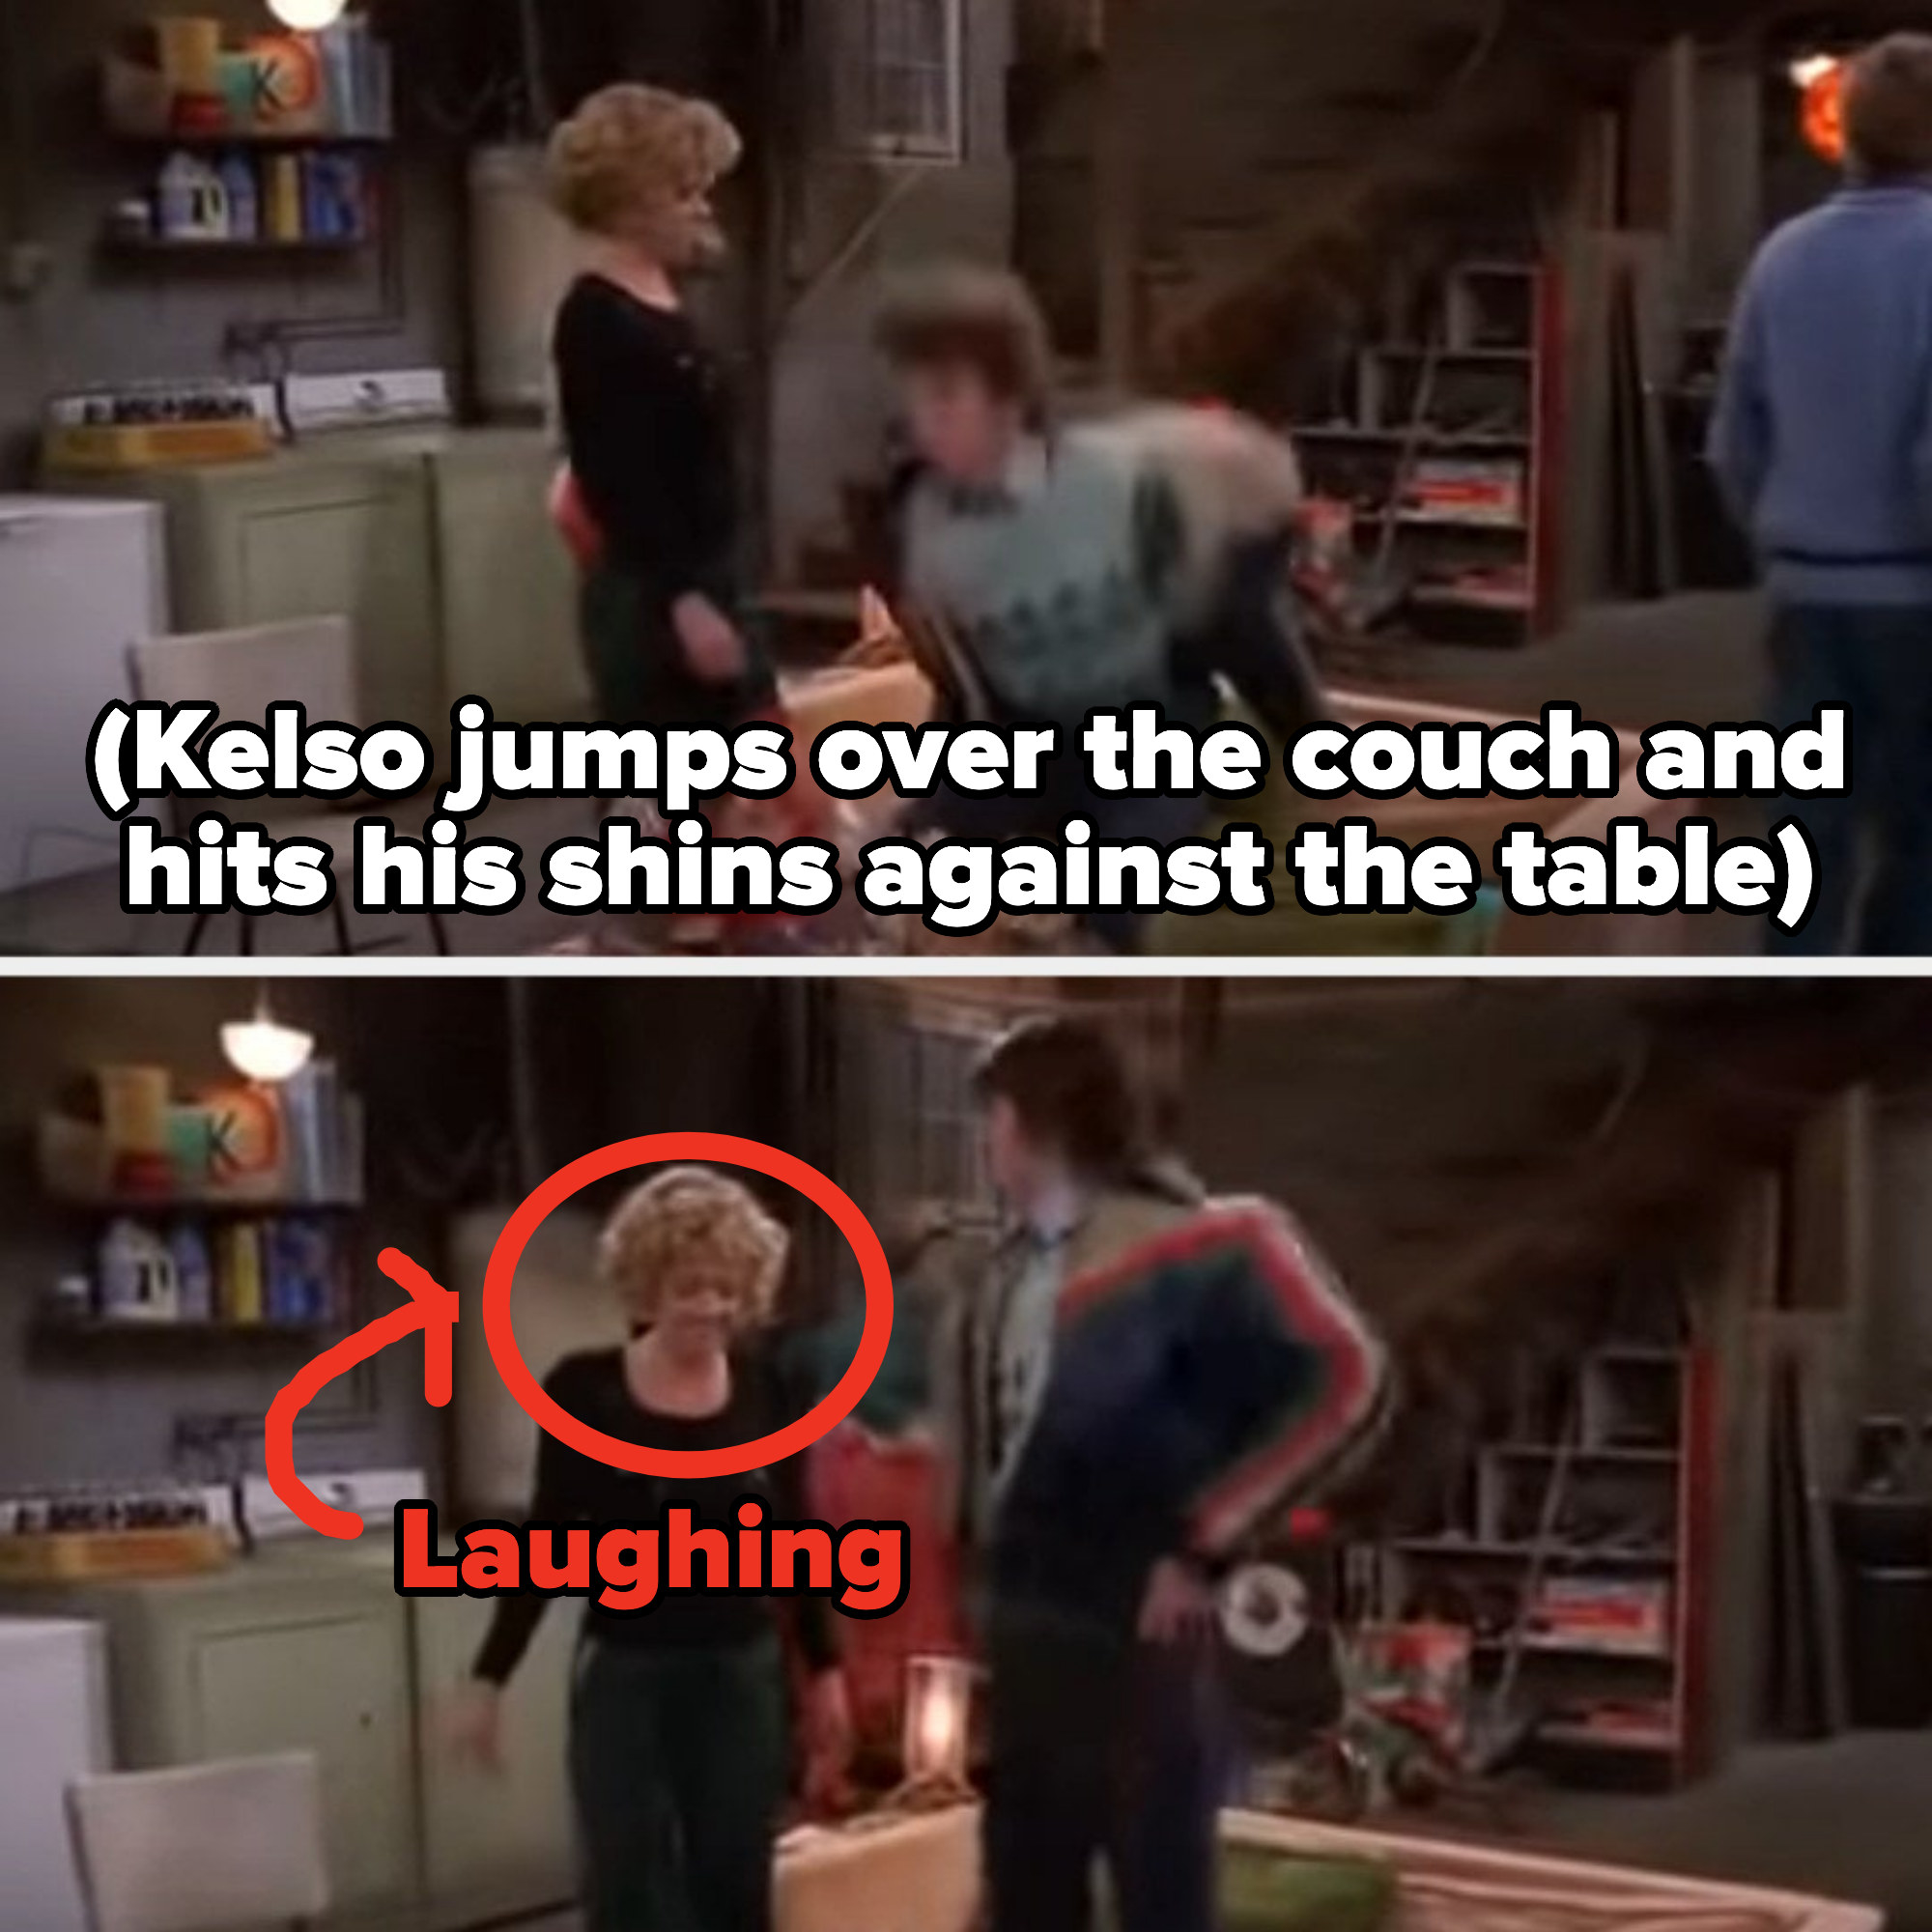 Lisa avoids eye contact with Ashton Kutcher to avoid laughing